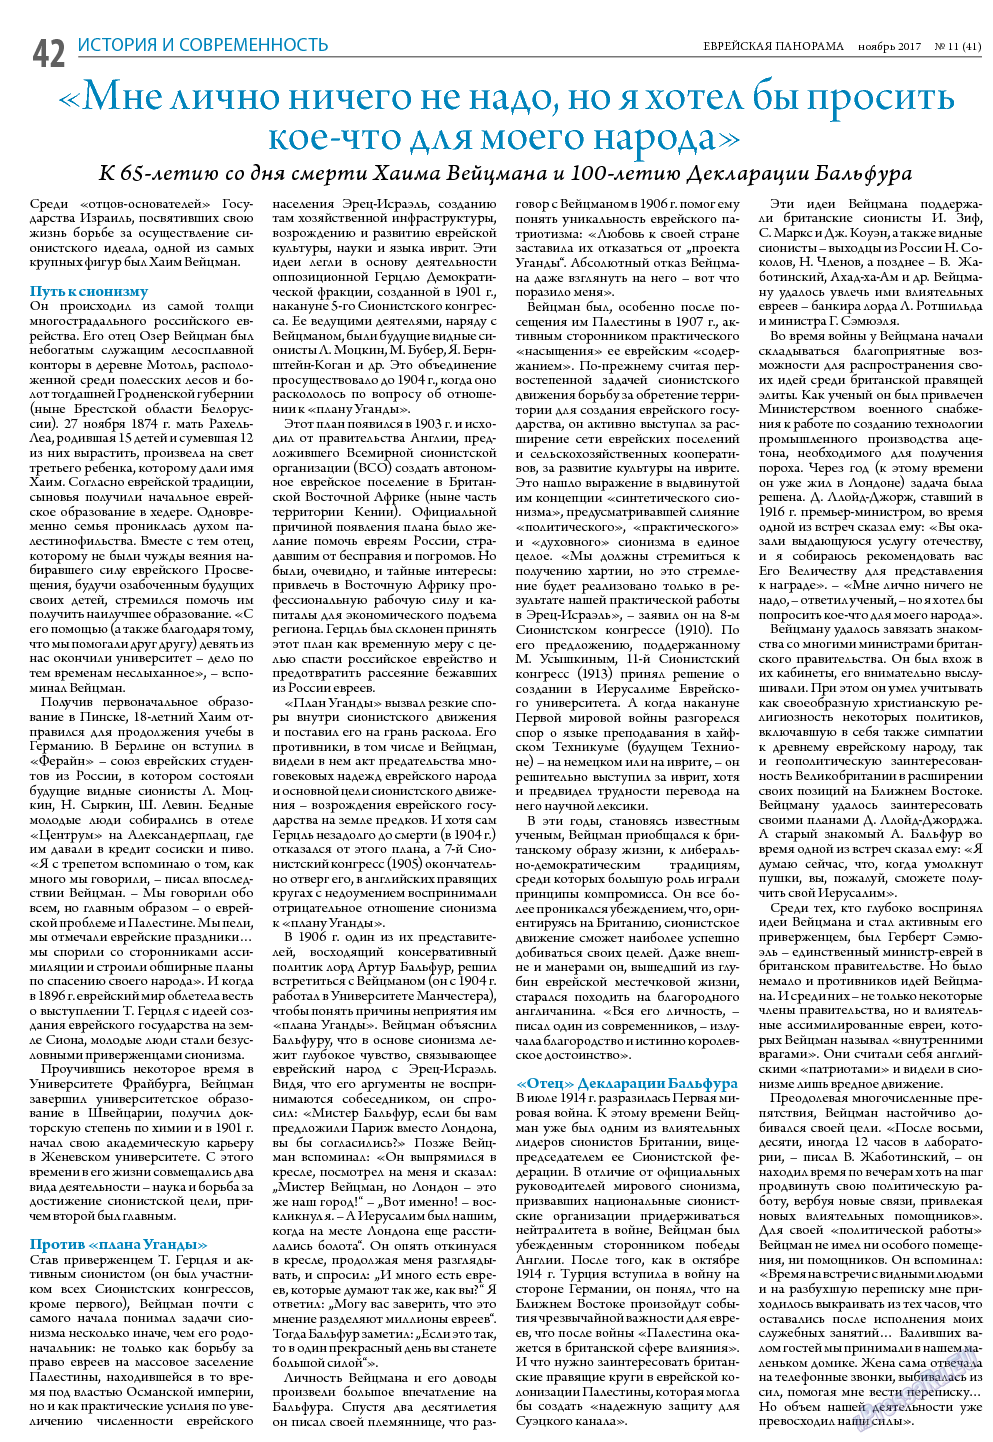 Еврейская панорама, газета. 2017 №11 стр.42